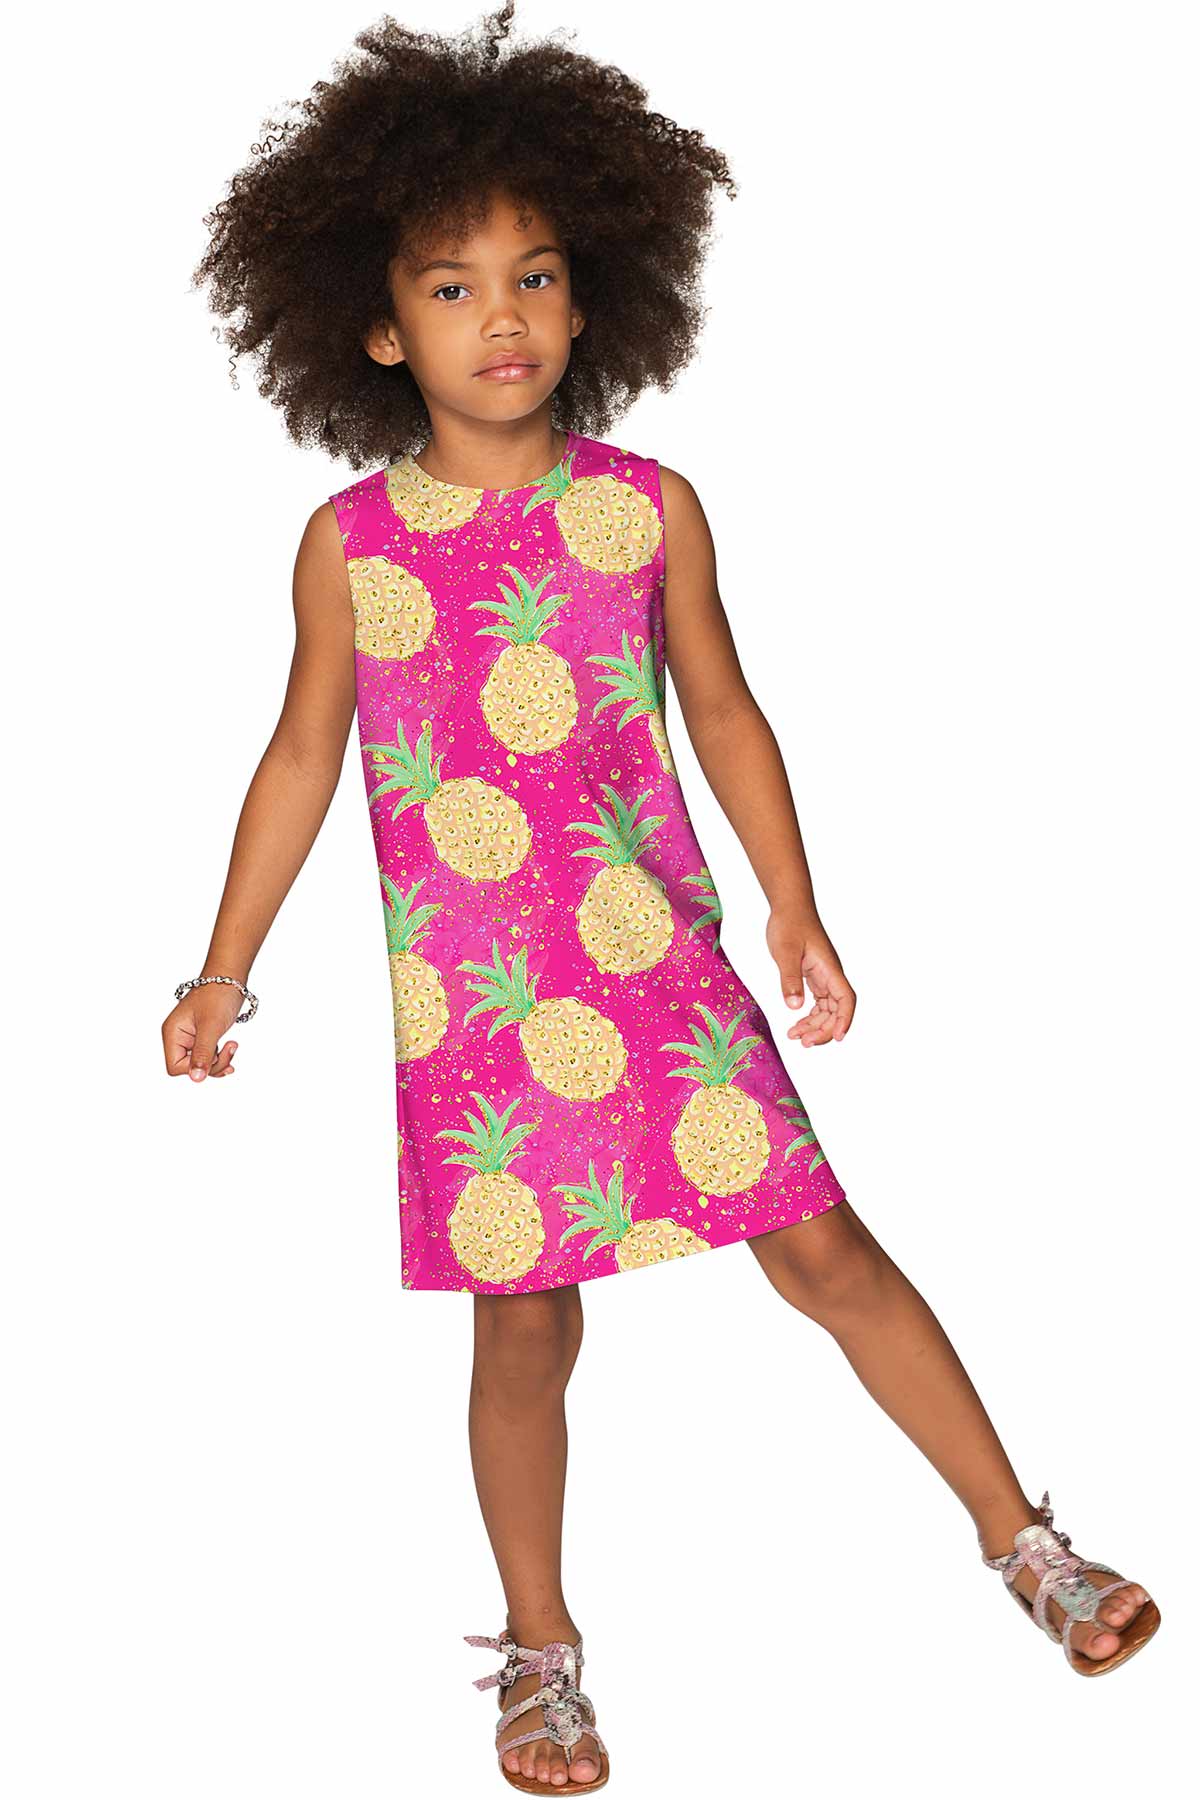 Piña Colada Adele Pink Pineapple Print Shift Summer Dress - Girls - Pineapple Clothing